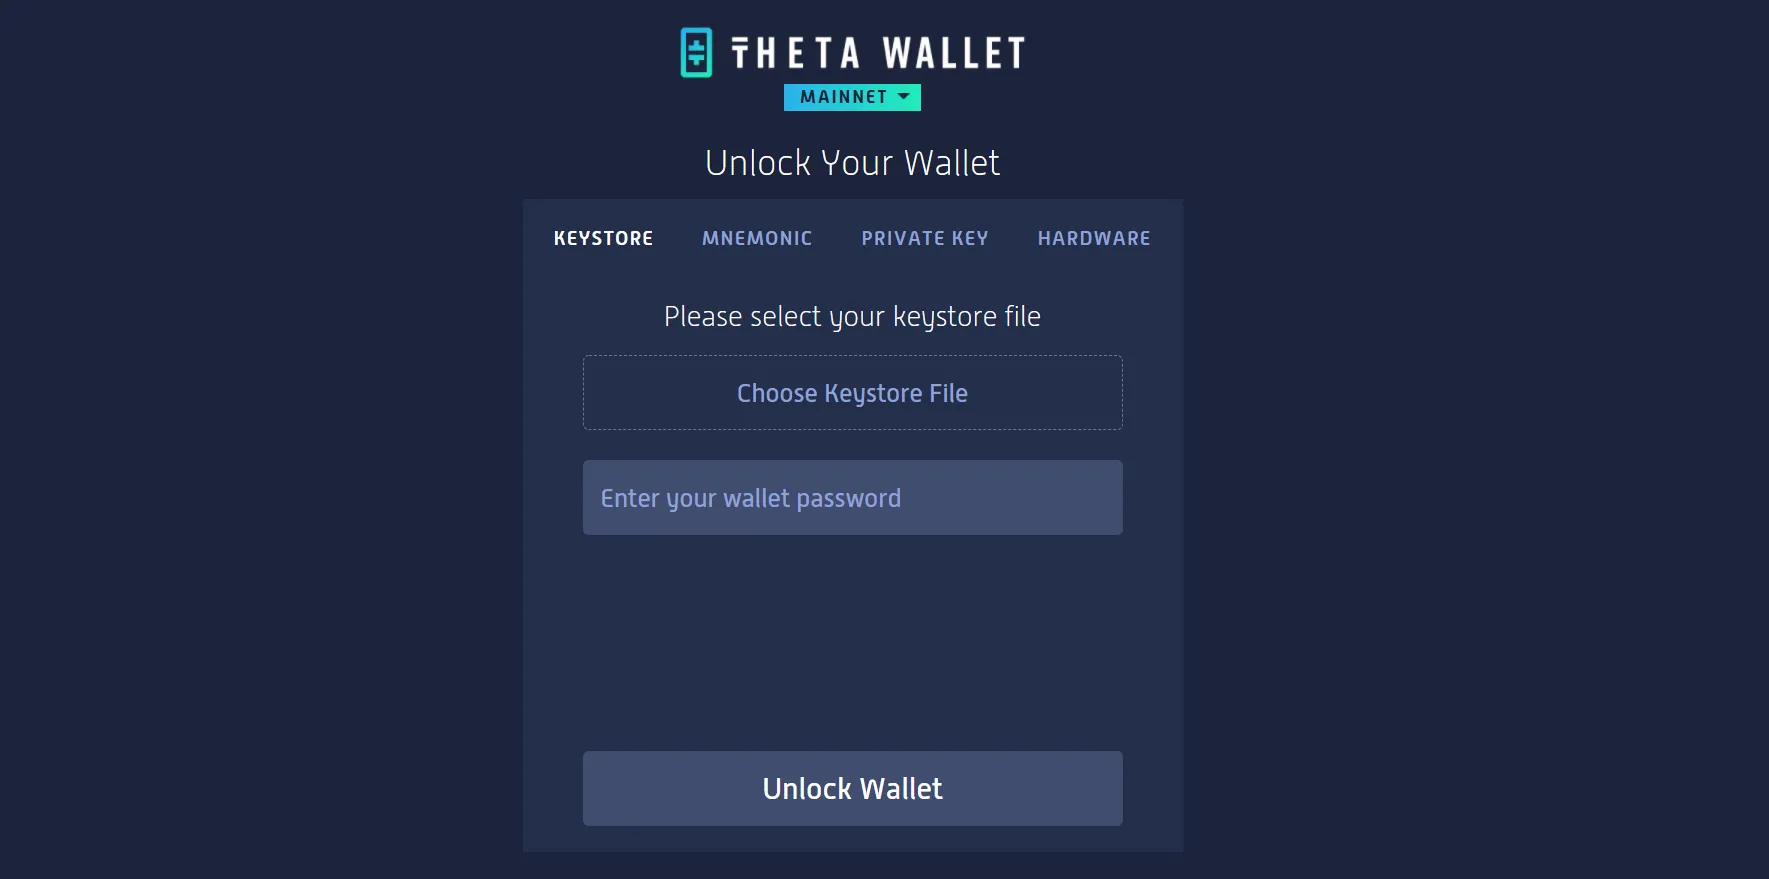 How to share theta: open theta wallet